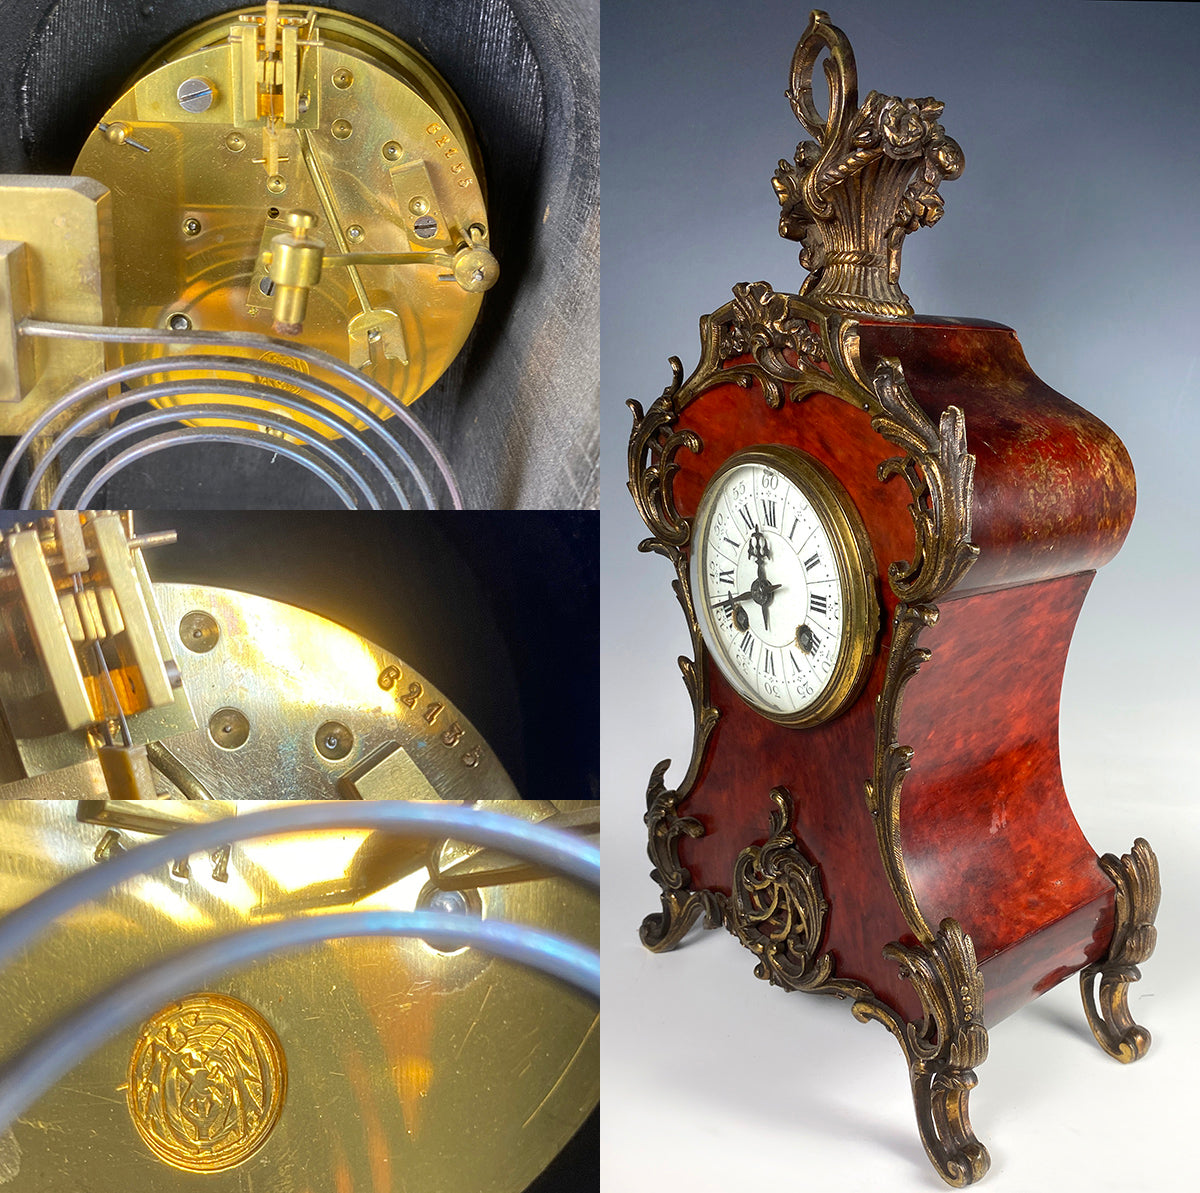 Fine Antique French 15" Tall Mantel Clock, Tortoise Shell & Bronze, Enamel Dial, Face, Louis XV